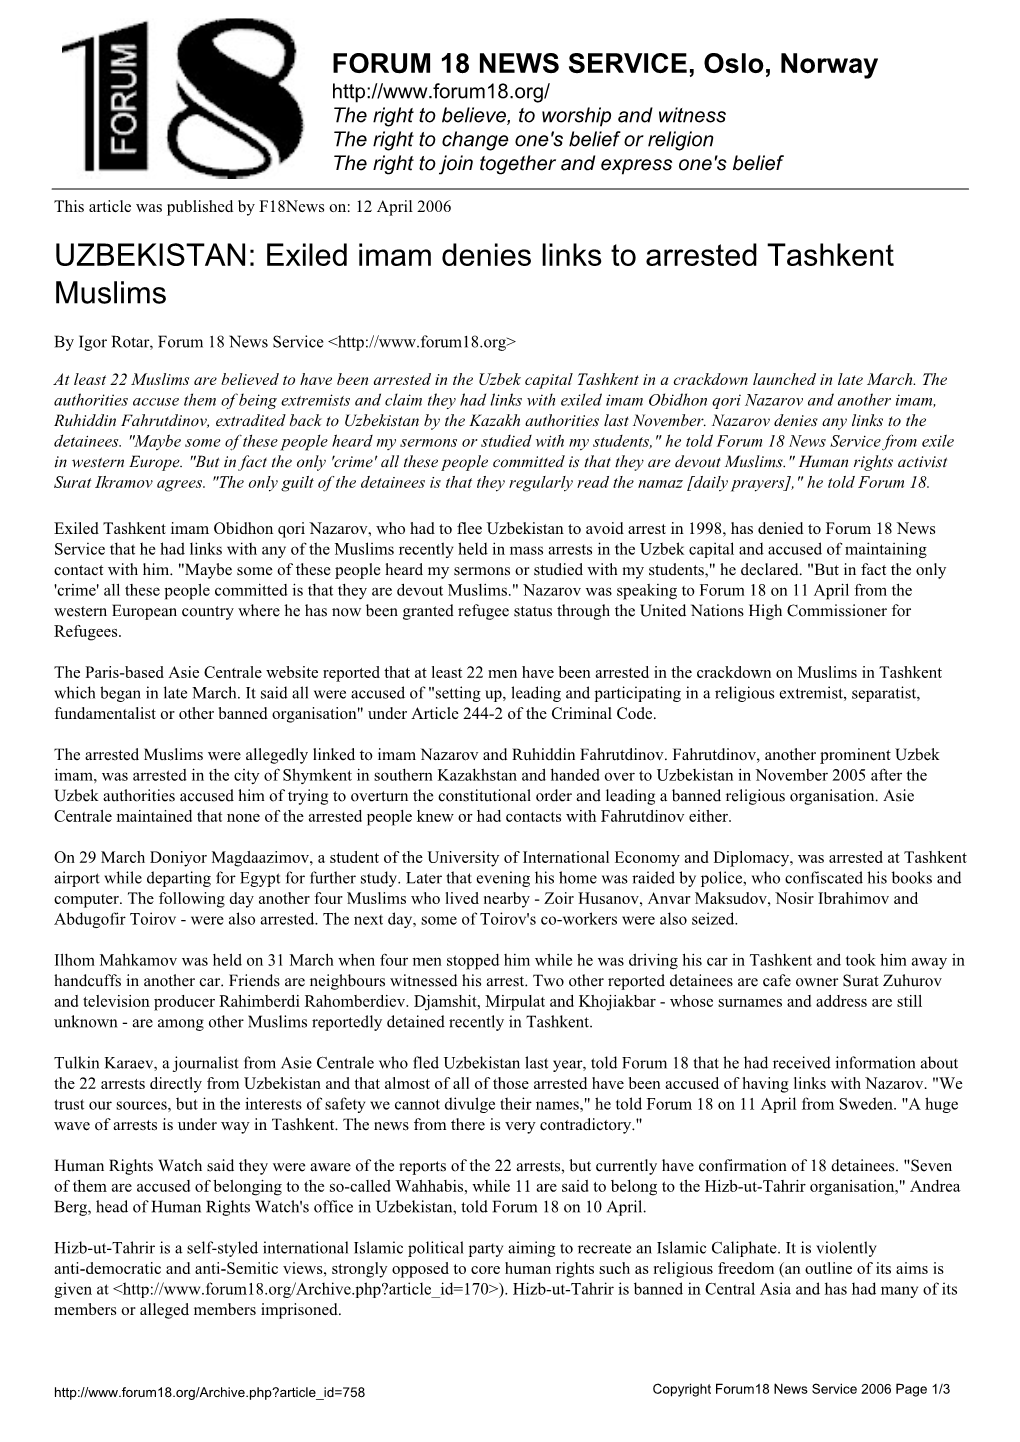 Exiled Imam Denies Links to Arrested Tashkent Muslims